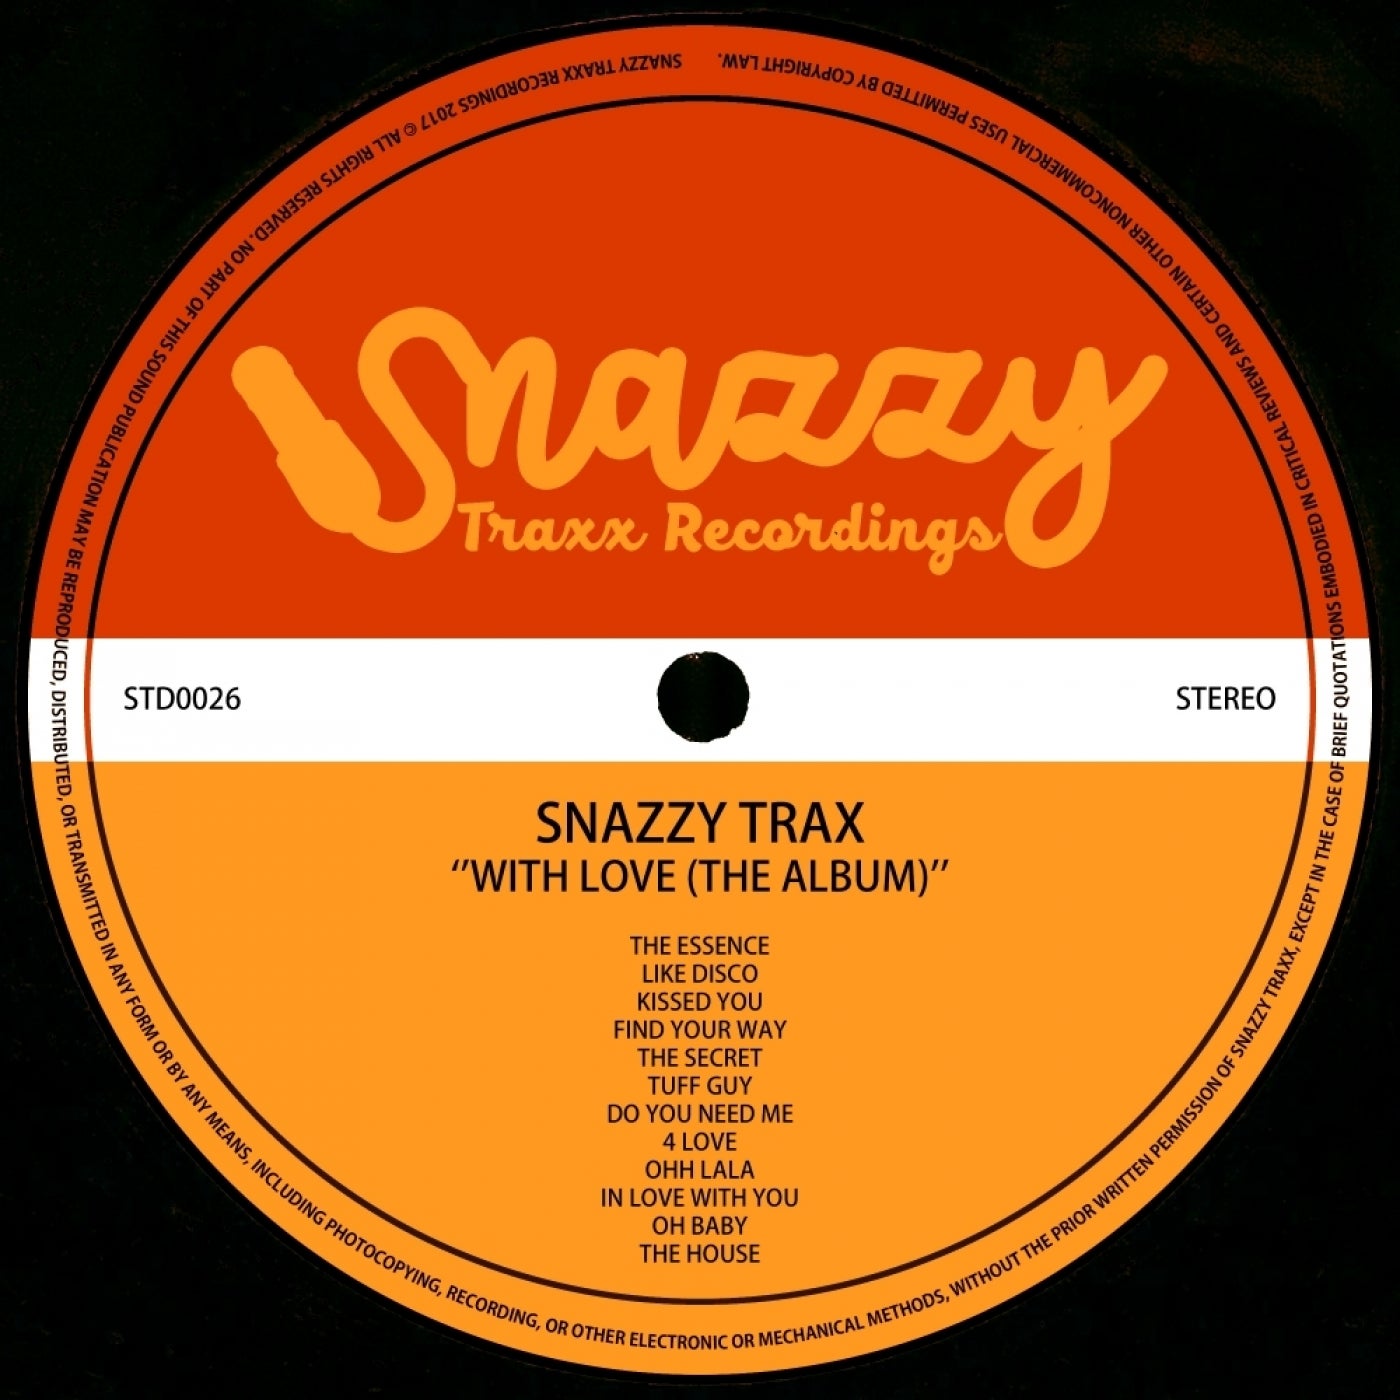 With Love (The Album)